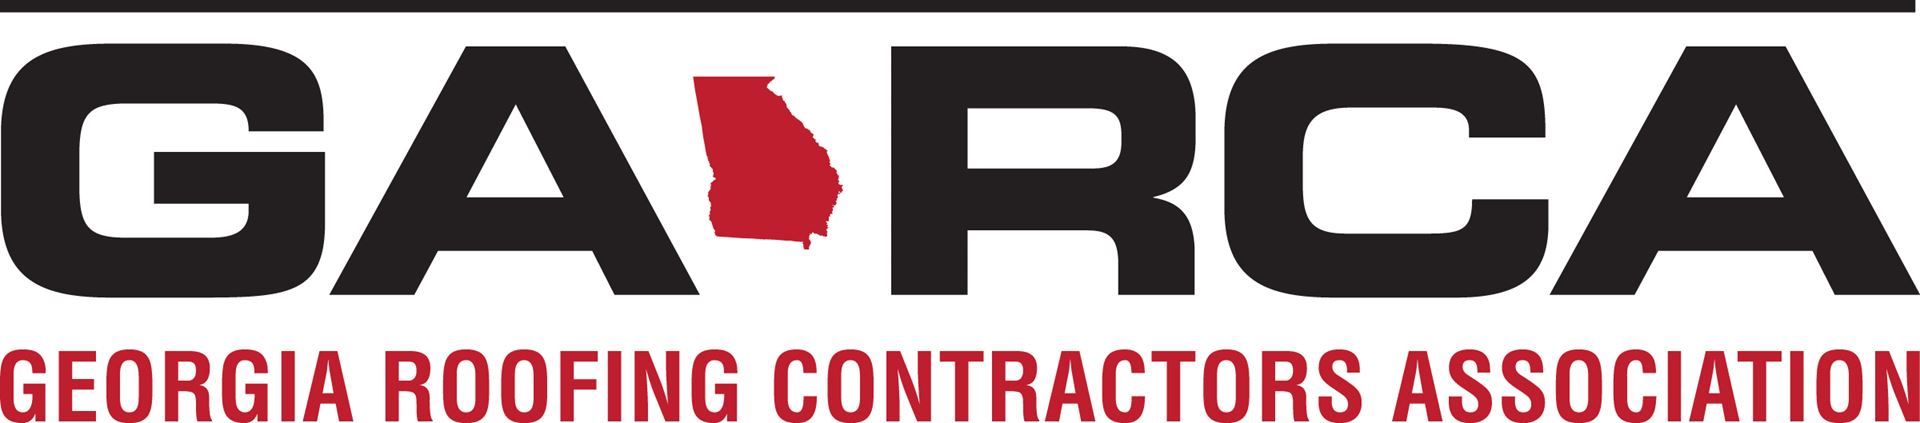 Georgia Roofing Contractors Association logo